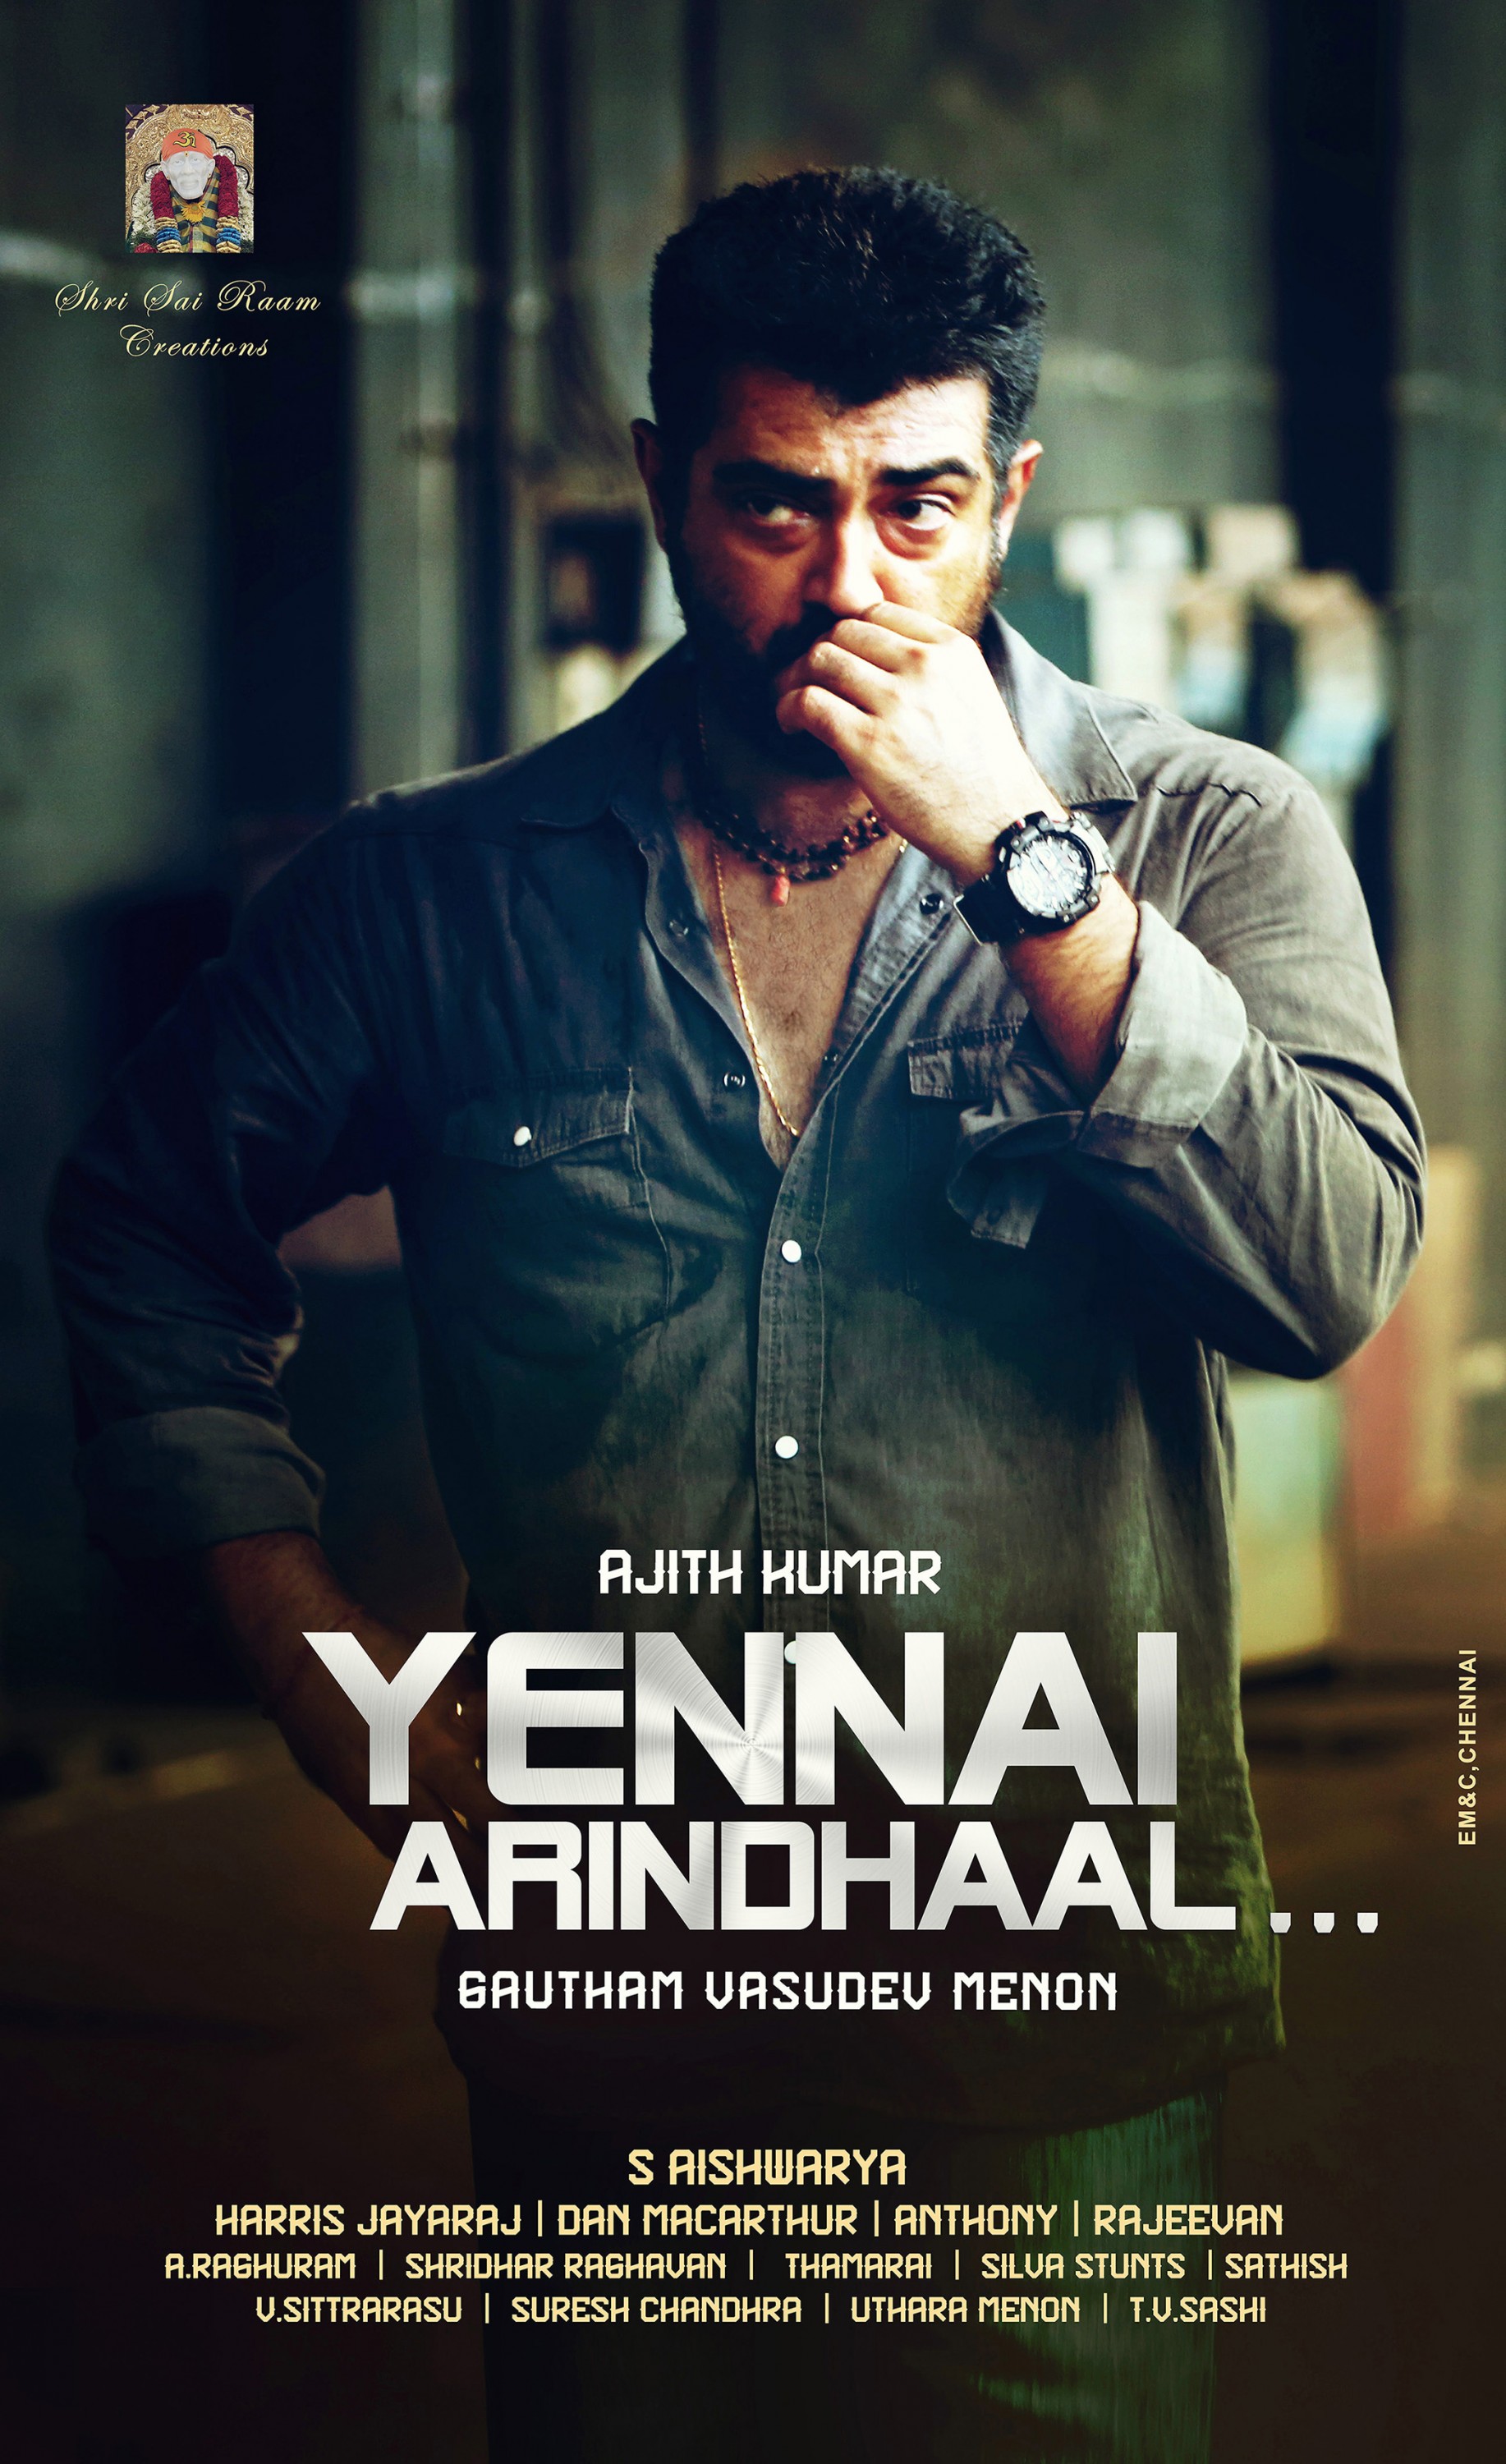 Mega Sized Movie Poster Image for Yennai Arindhaal... (#2 of 11)